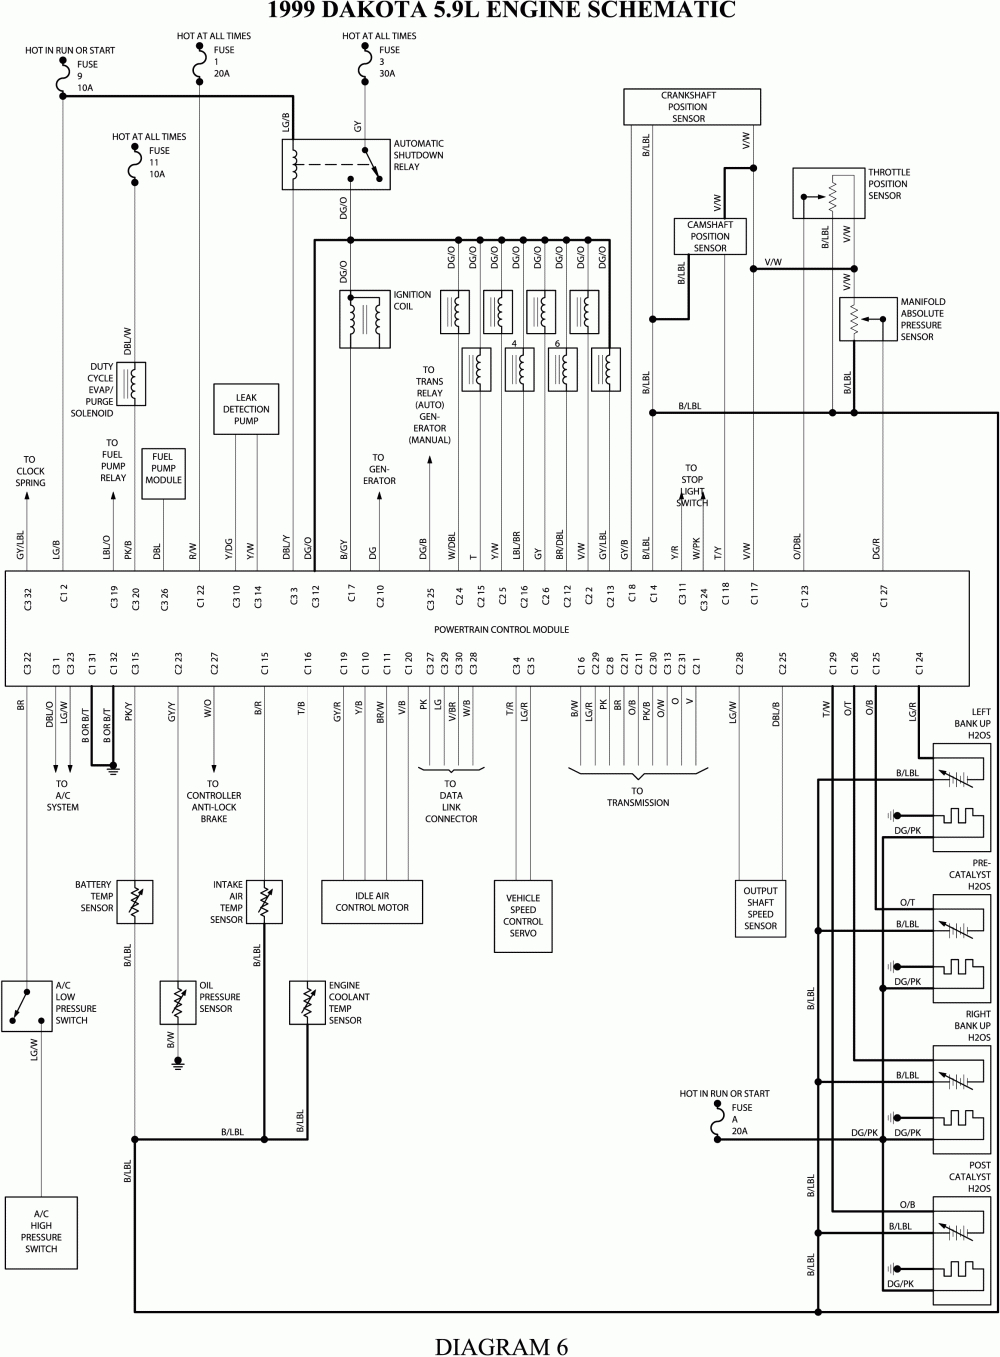 Dodge Wiring Diagrams | Wiring Diagram - Dodge Ignition Wiring Diagram